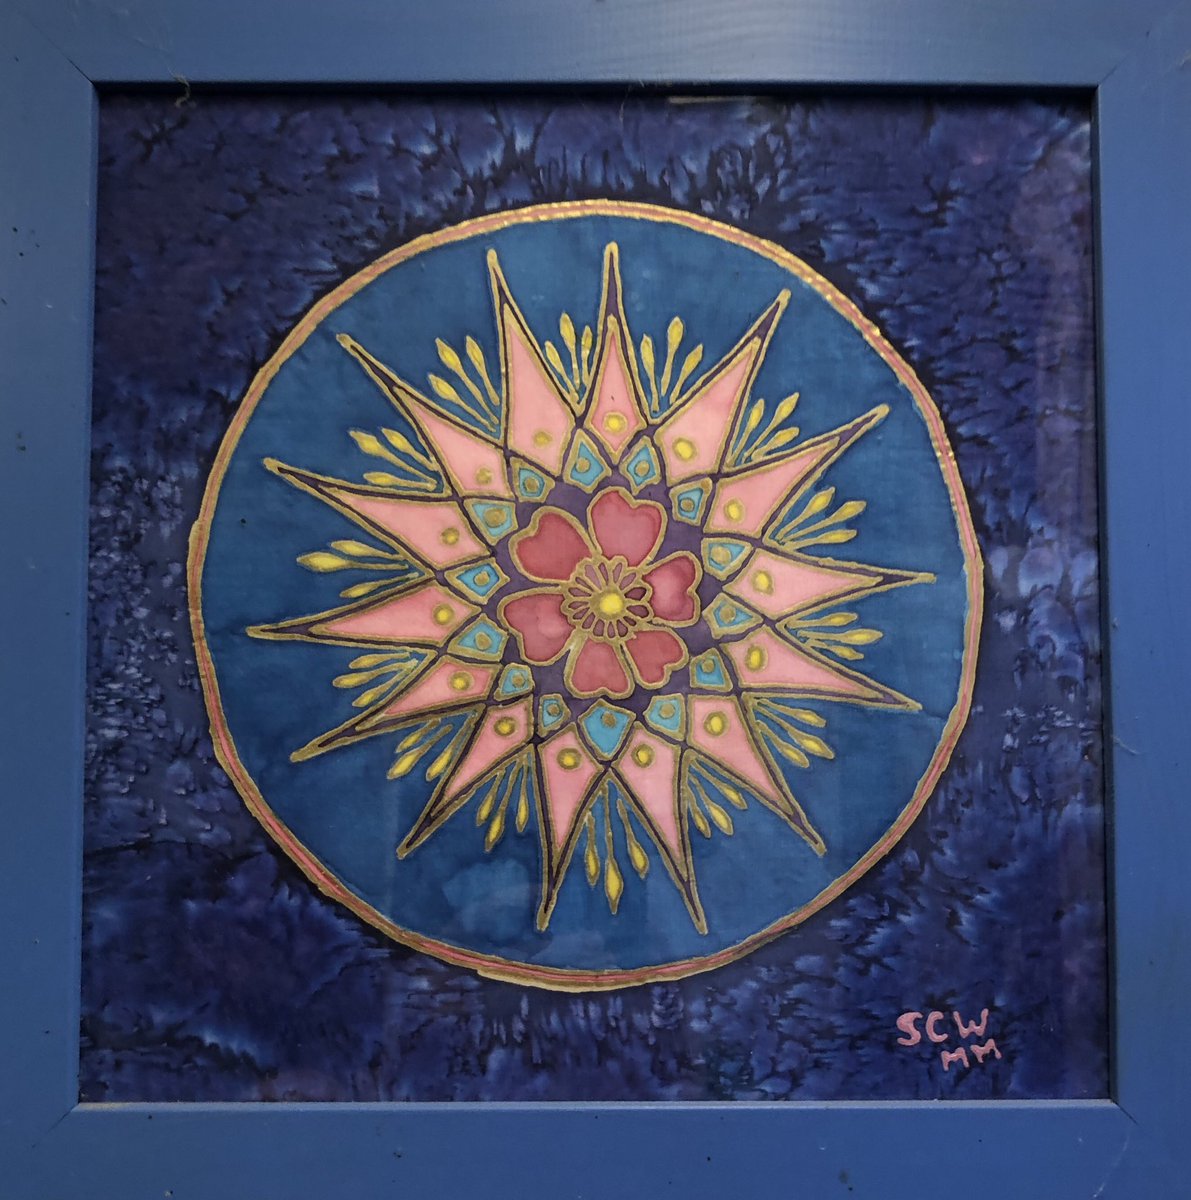 💜 My silk painting Mandala I made years ago. 💜 #crafts #art #walllights #wallart  #supportsmallbusiness  #burystedmunds #suffolk #craftsofinstagram #makingthings #silk #painting #silkpainting #mandala